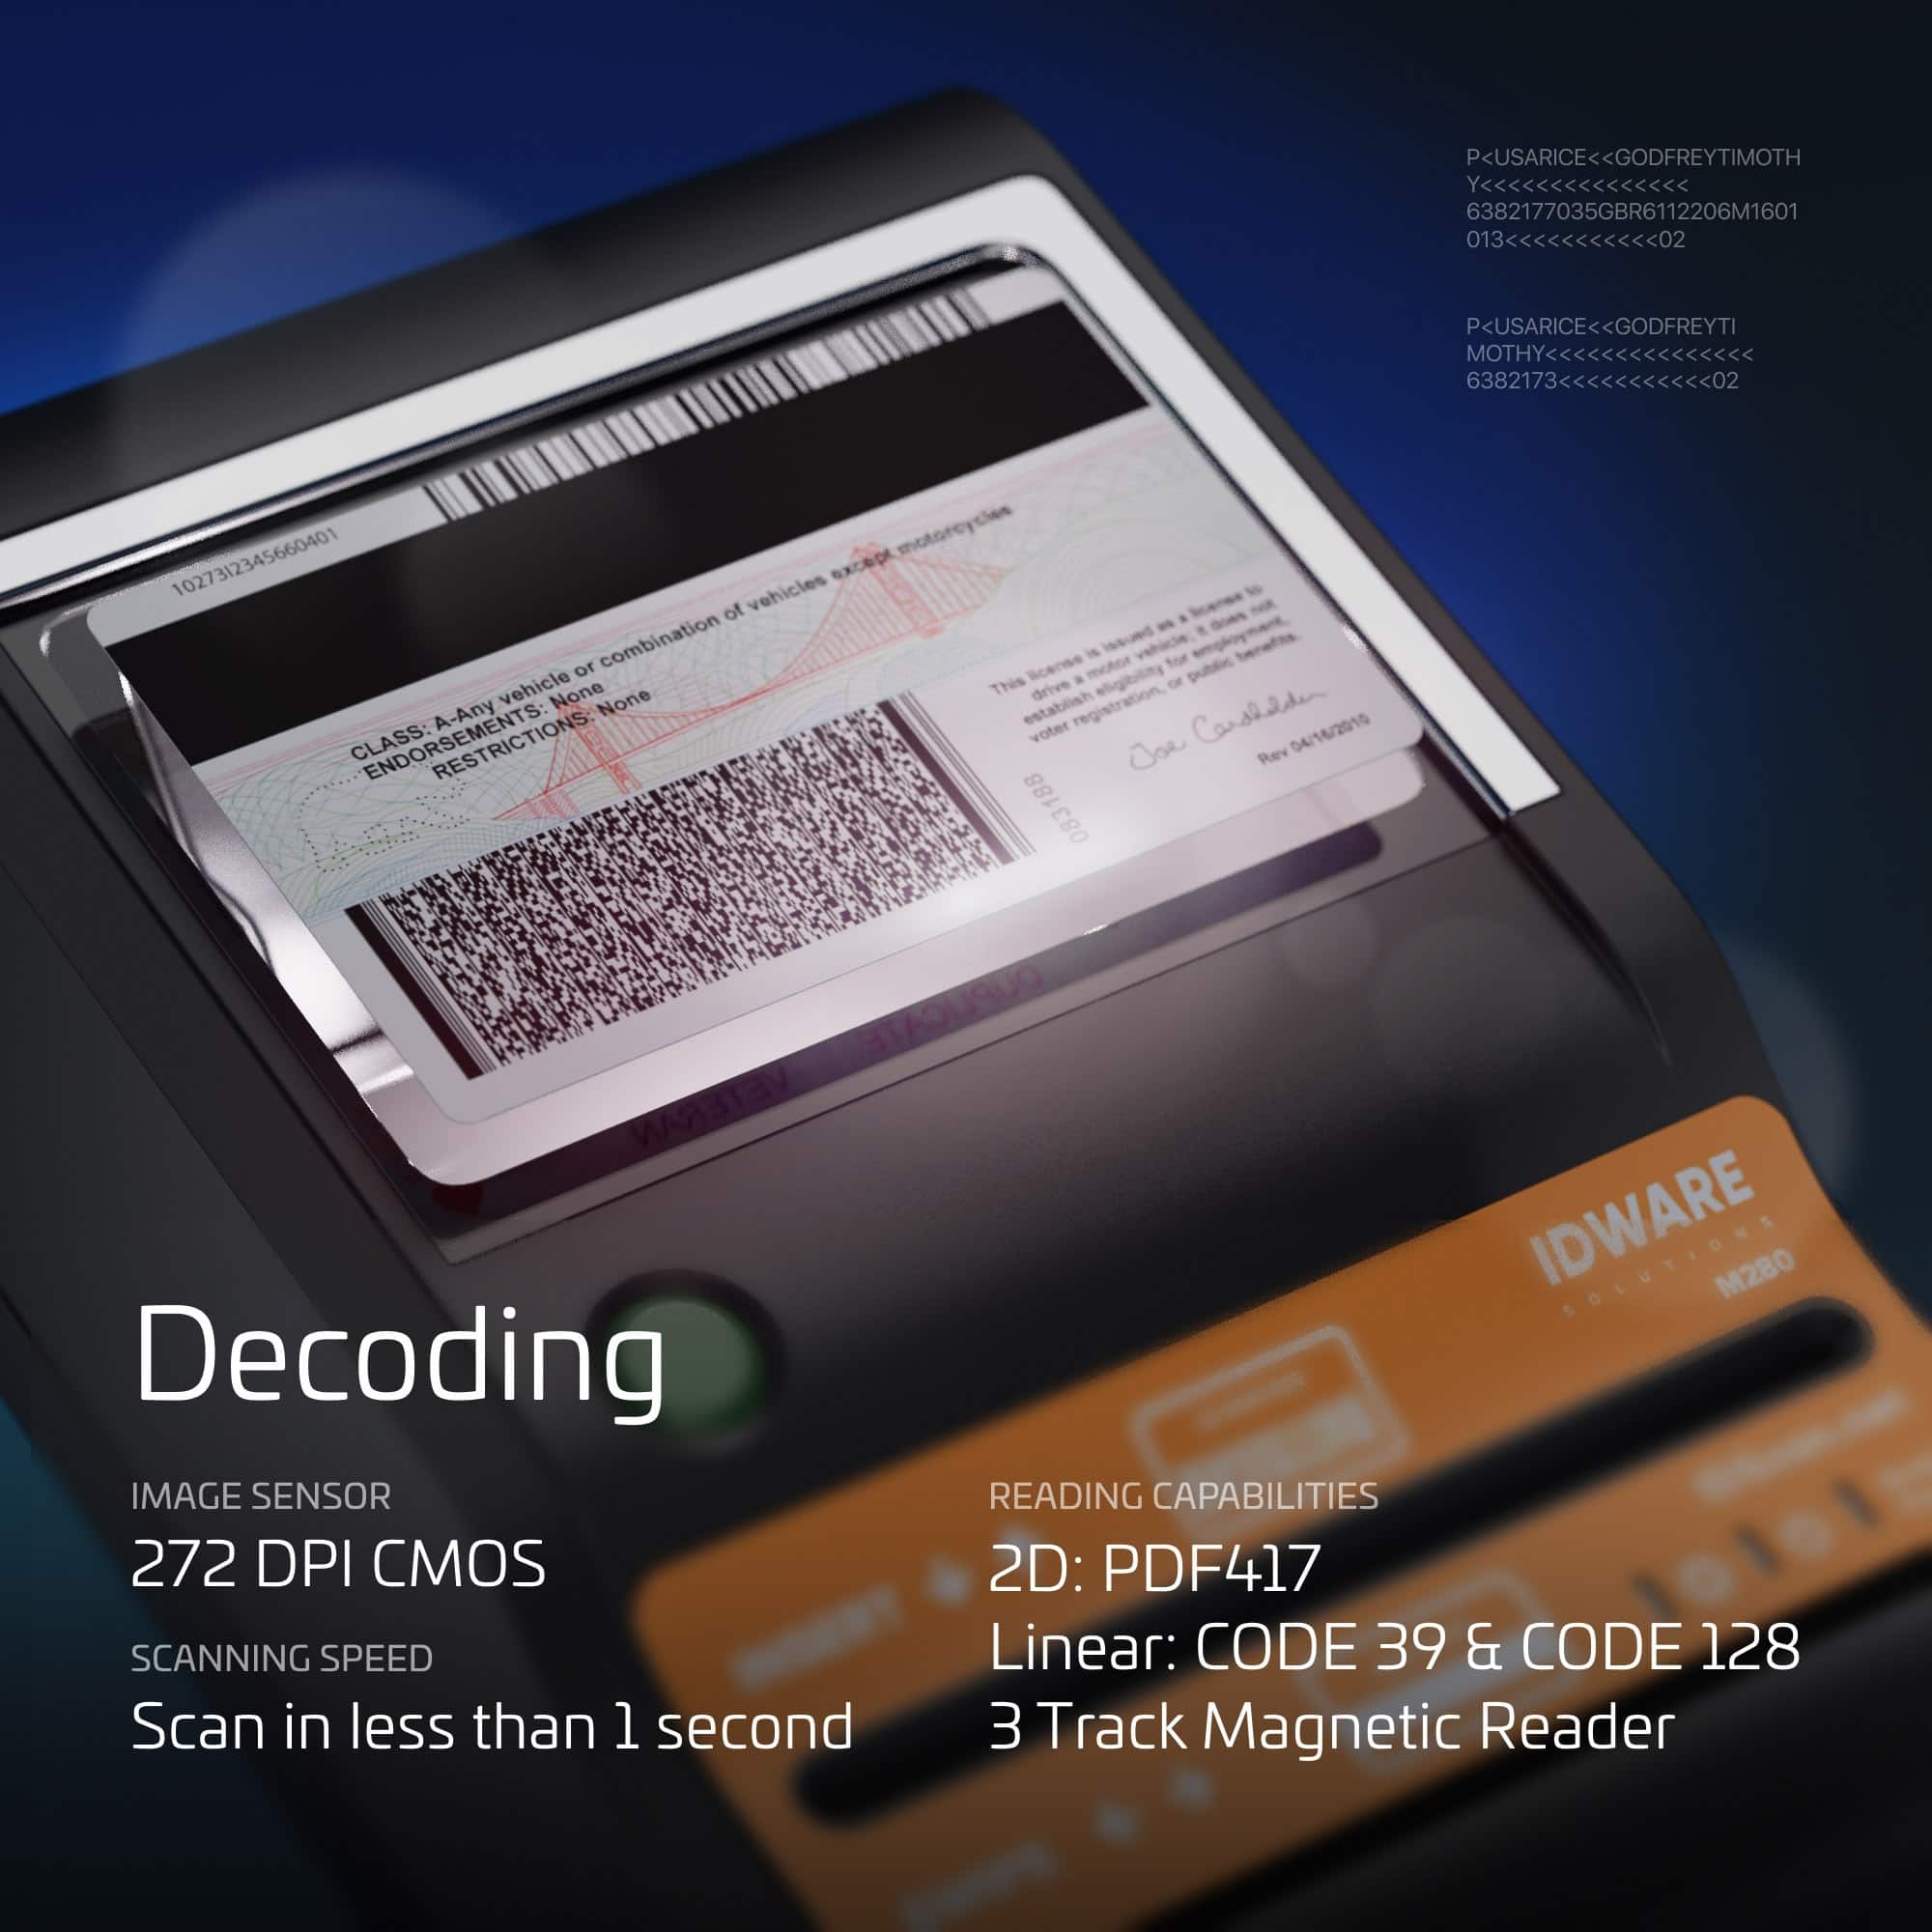 E-Seek M280 driver's license reader decoding graphic